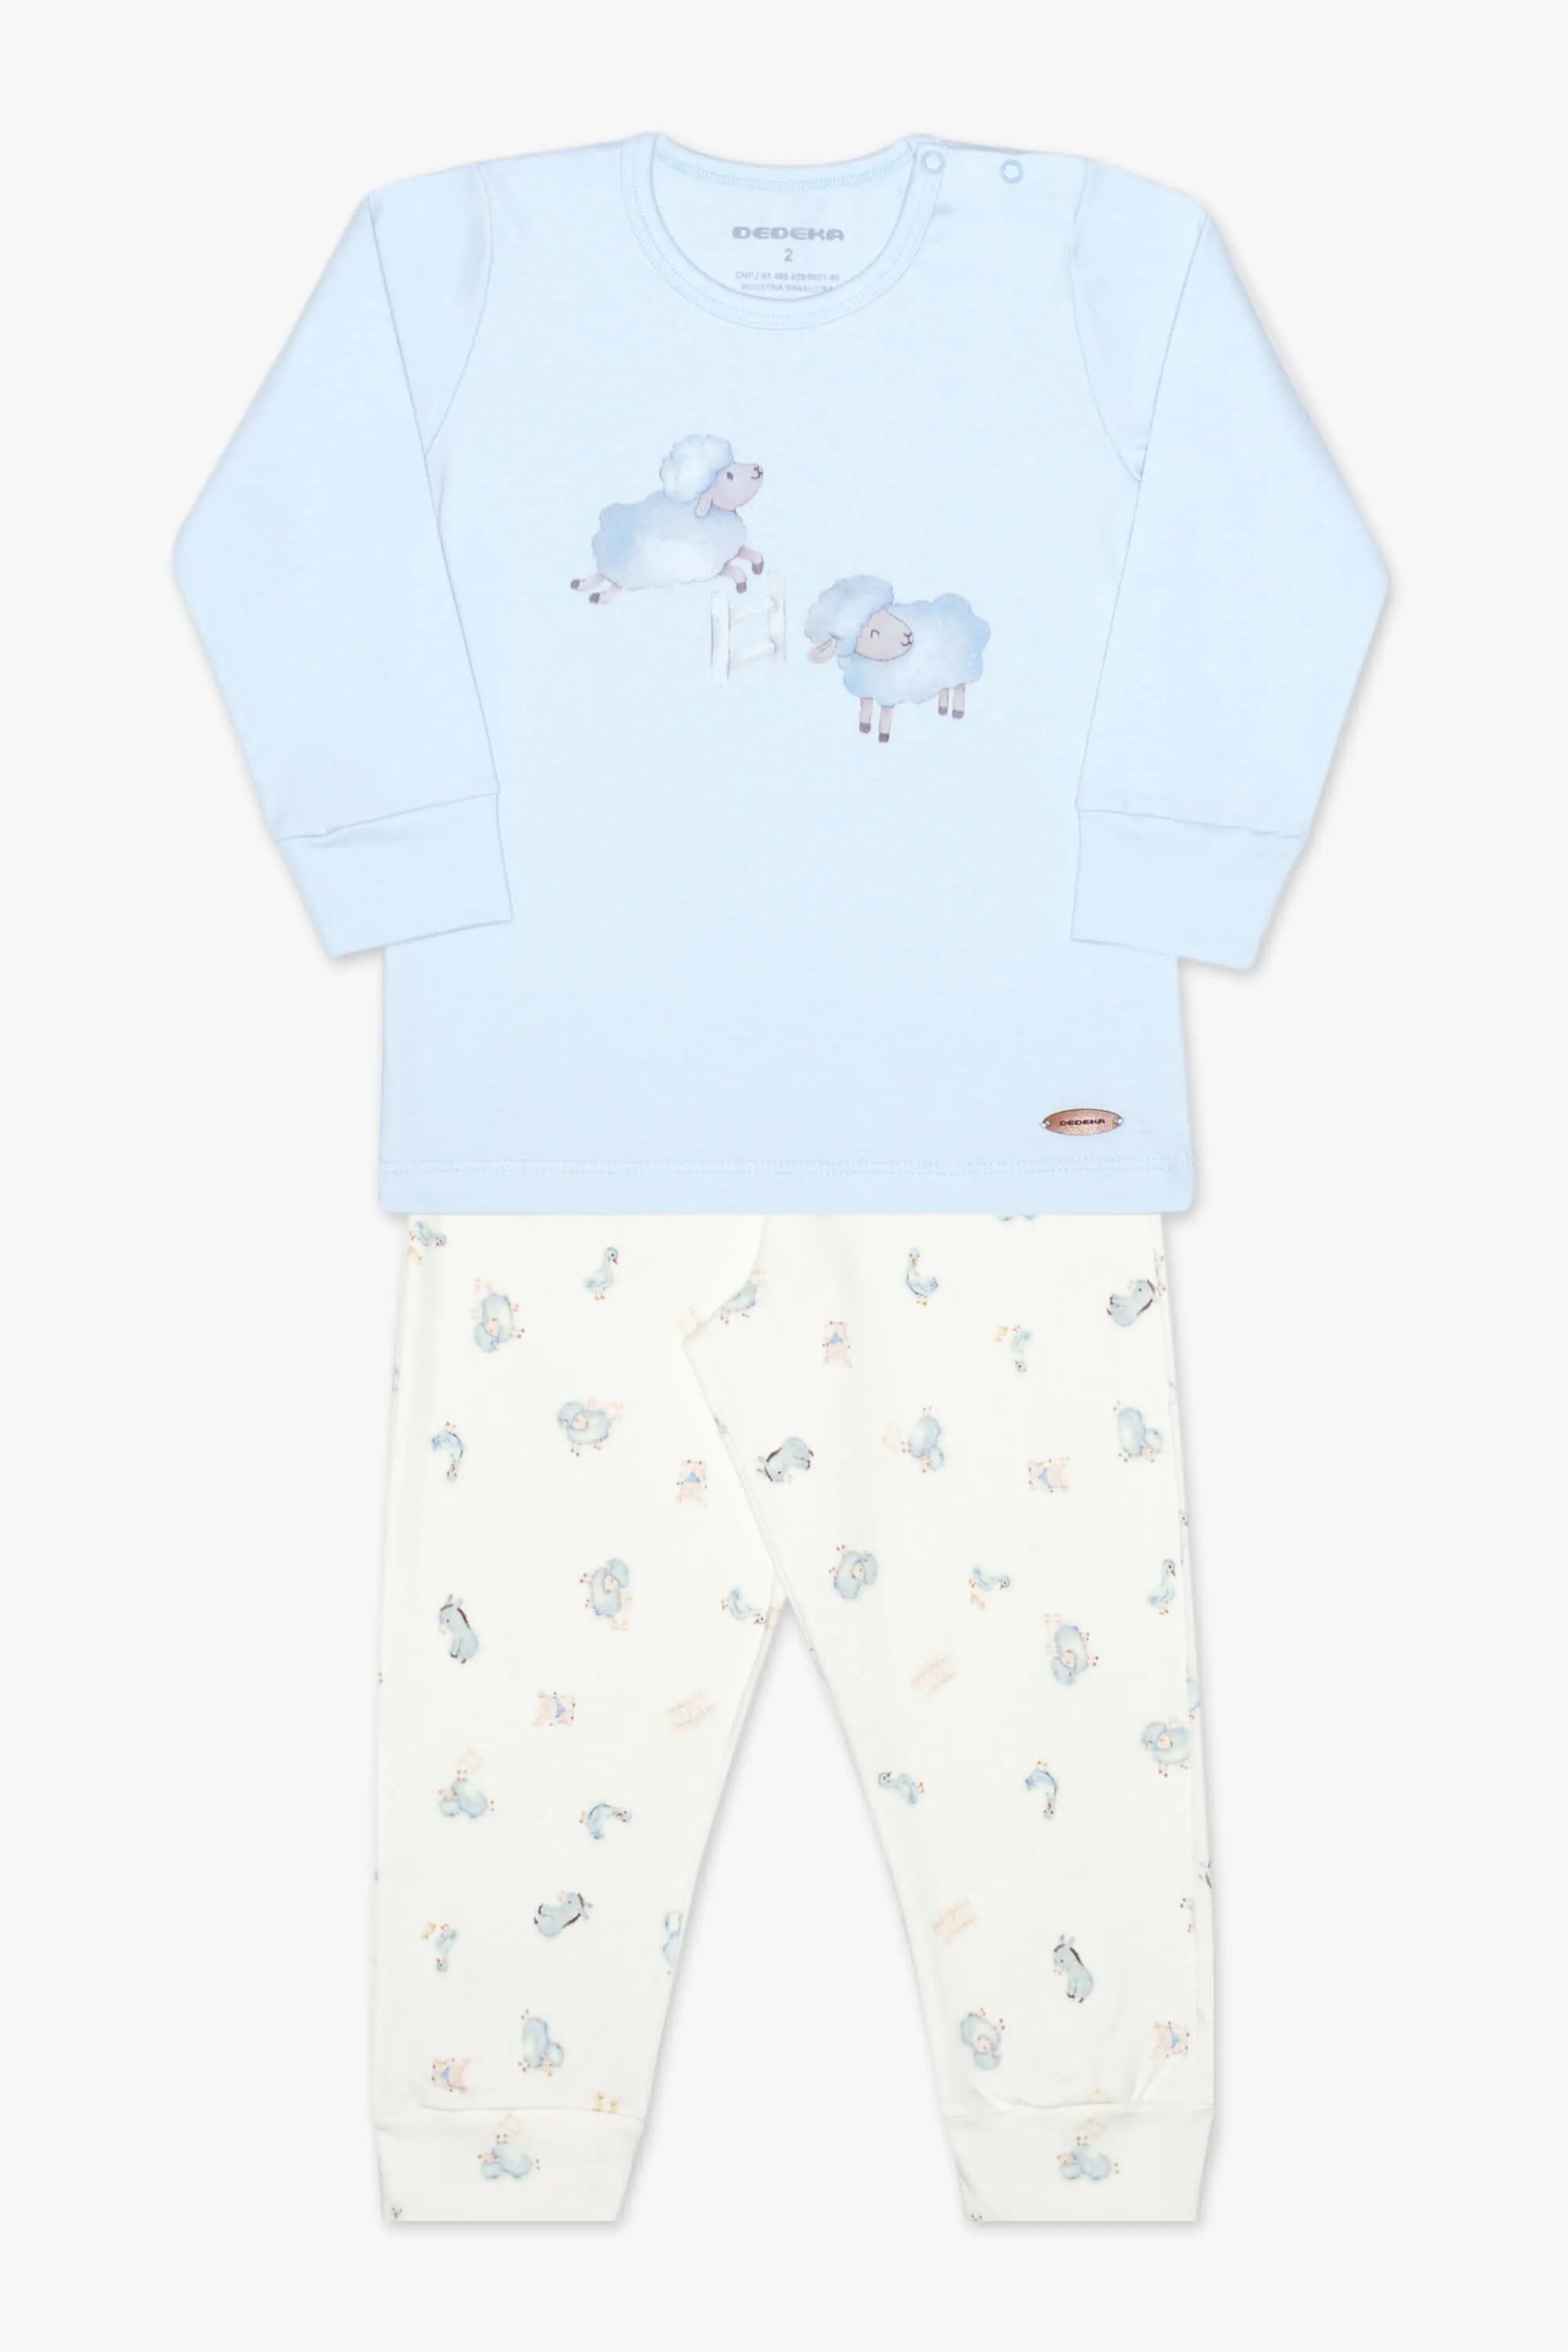 Pijama Azul Ovelhinhas Dedeka